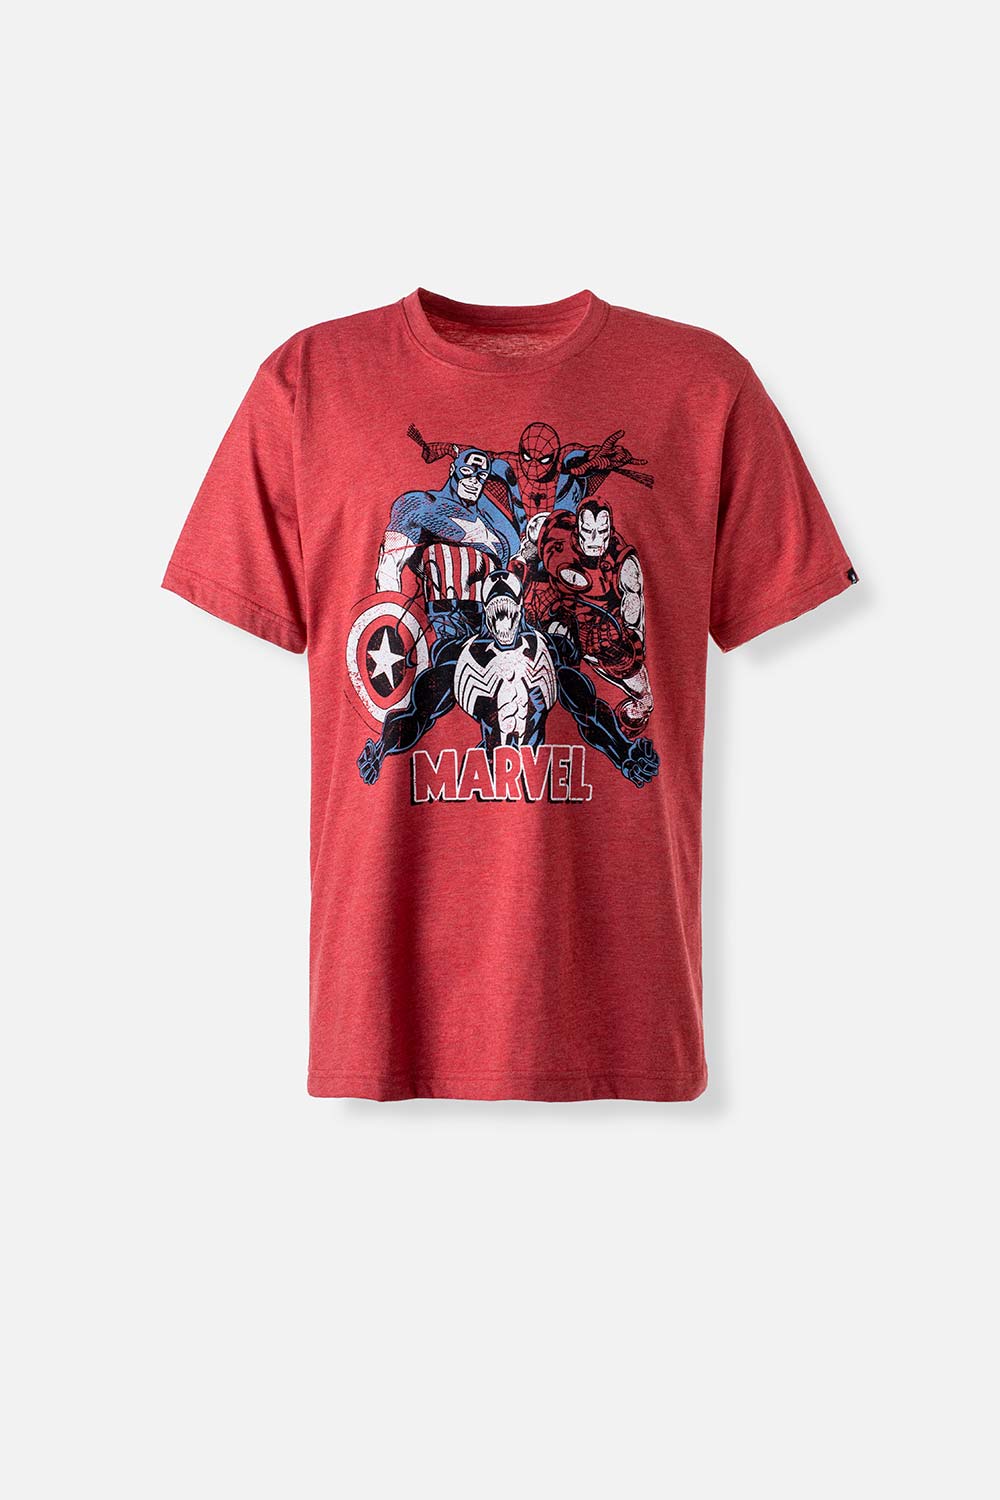 Camiseta de Marvel manga corta rojo jaspe para hombre M-0